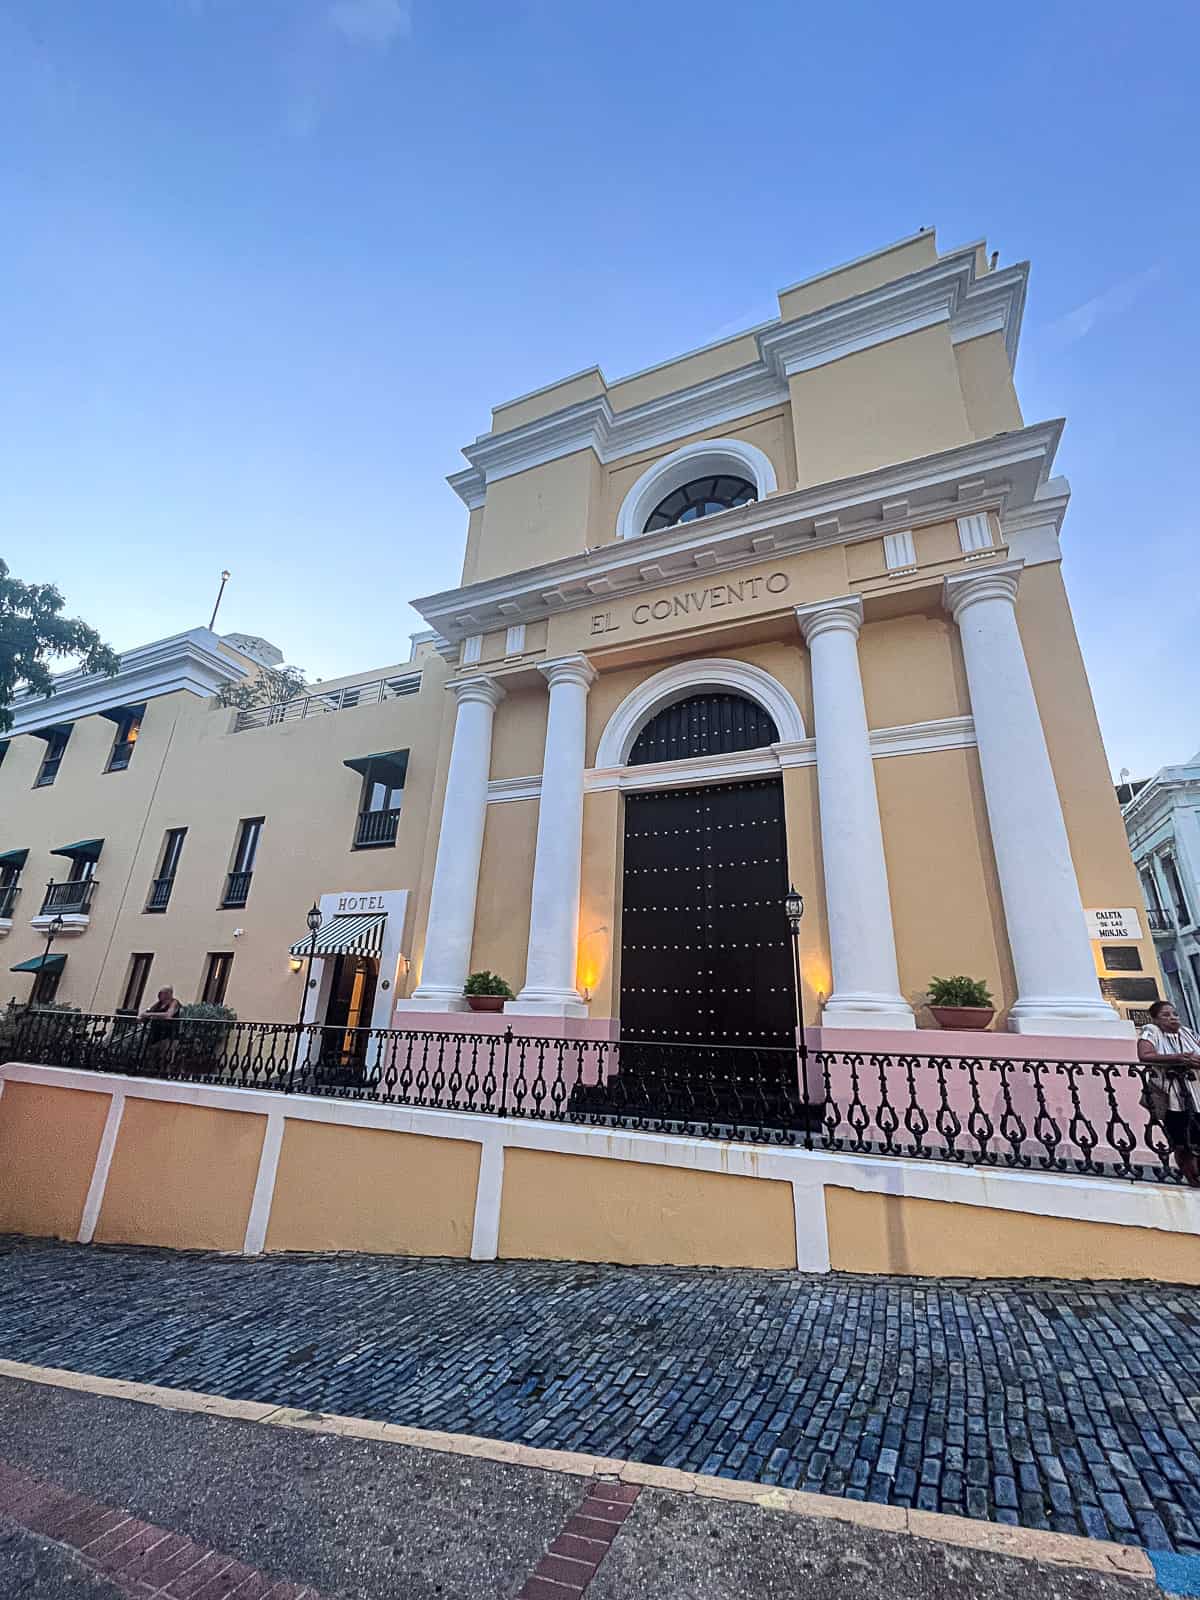 Blue cobblestone street view of Hotel el Convento Restaurant in Old San Juan Puerto Rico